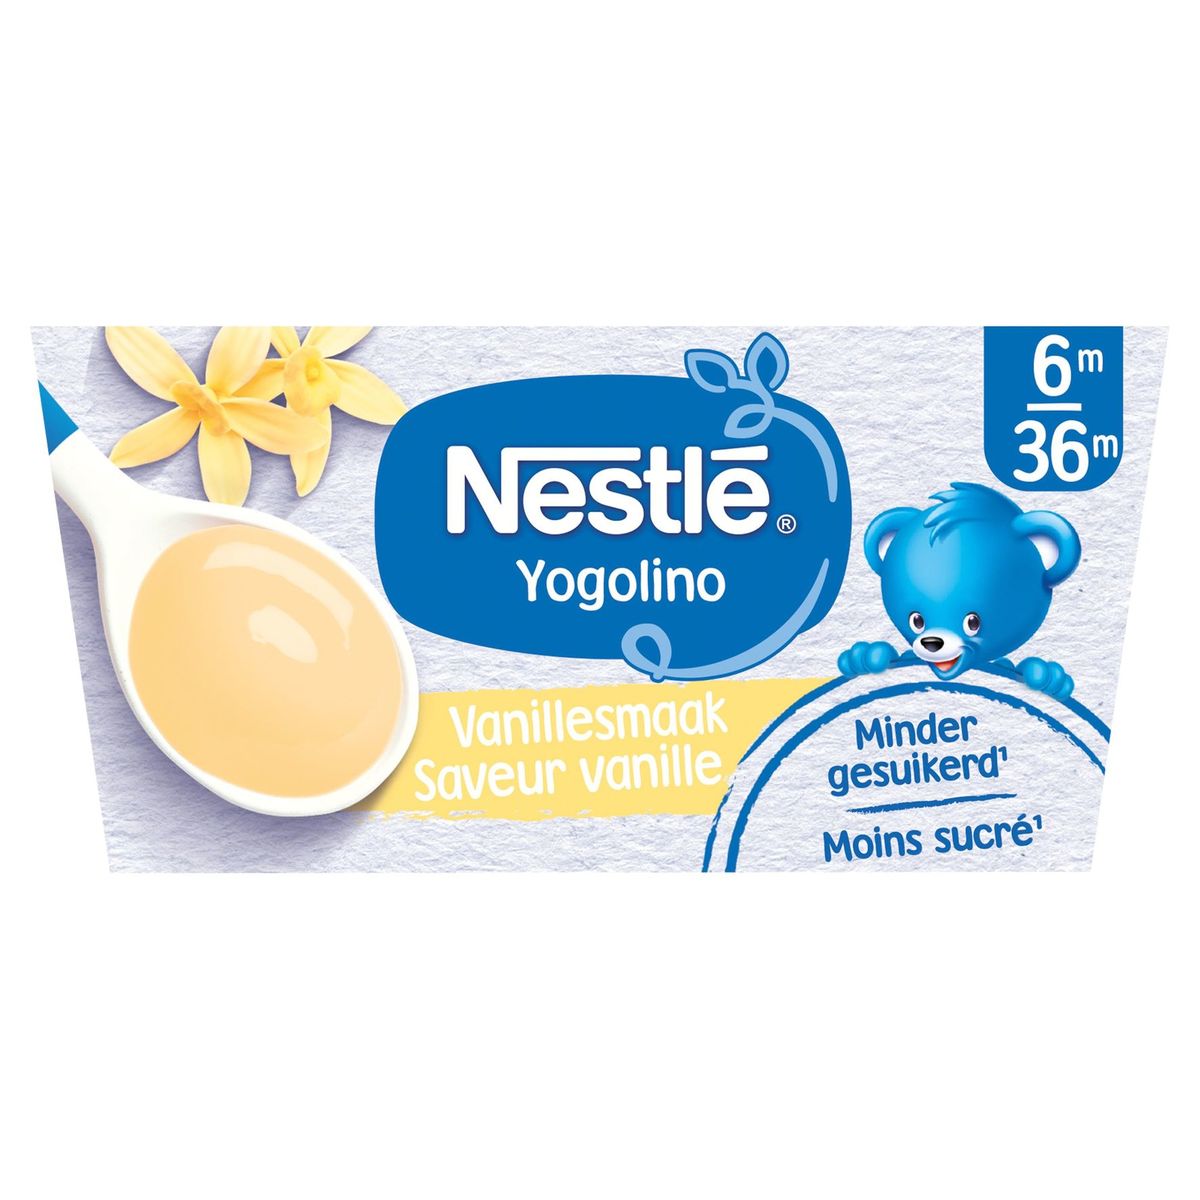 Nestlé Yogolino Saveur Vanille 4 x 100 g